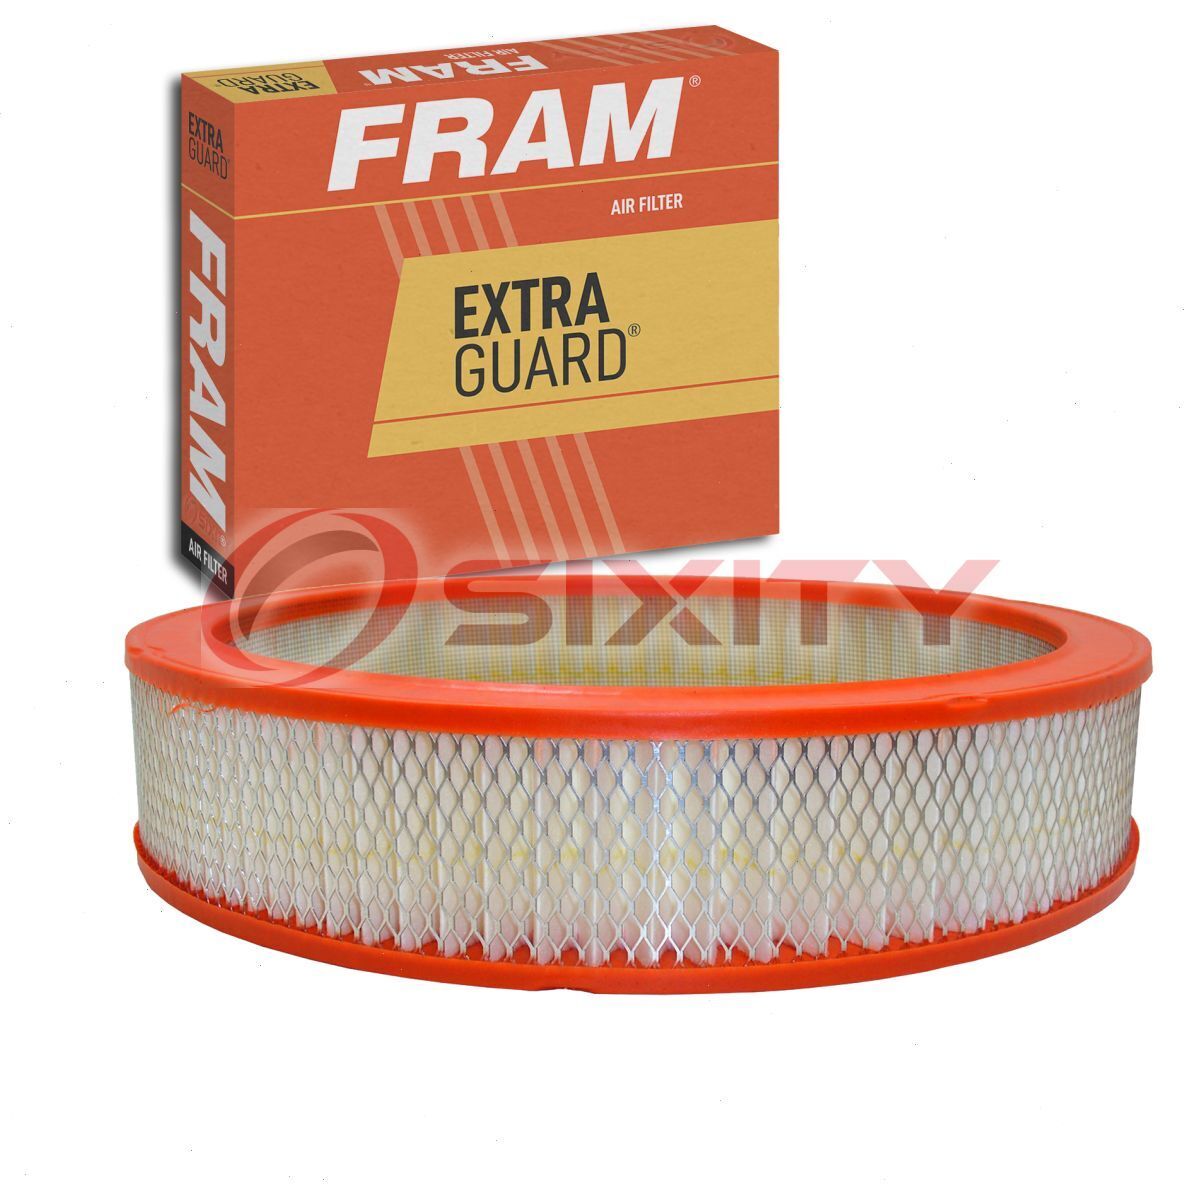 FRAM Extra Guard Air Filter for 1975-1979 Oldsmobile Cutlass Salon Intake ta